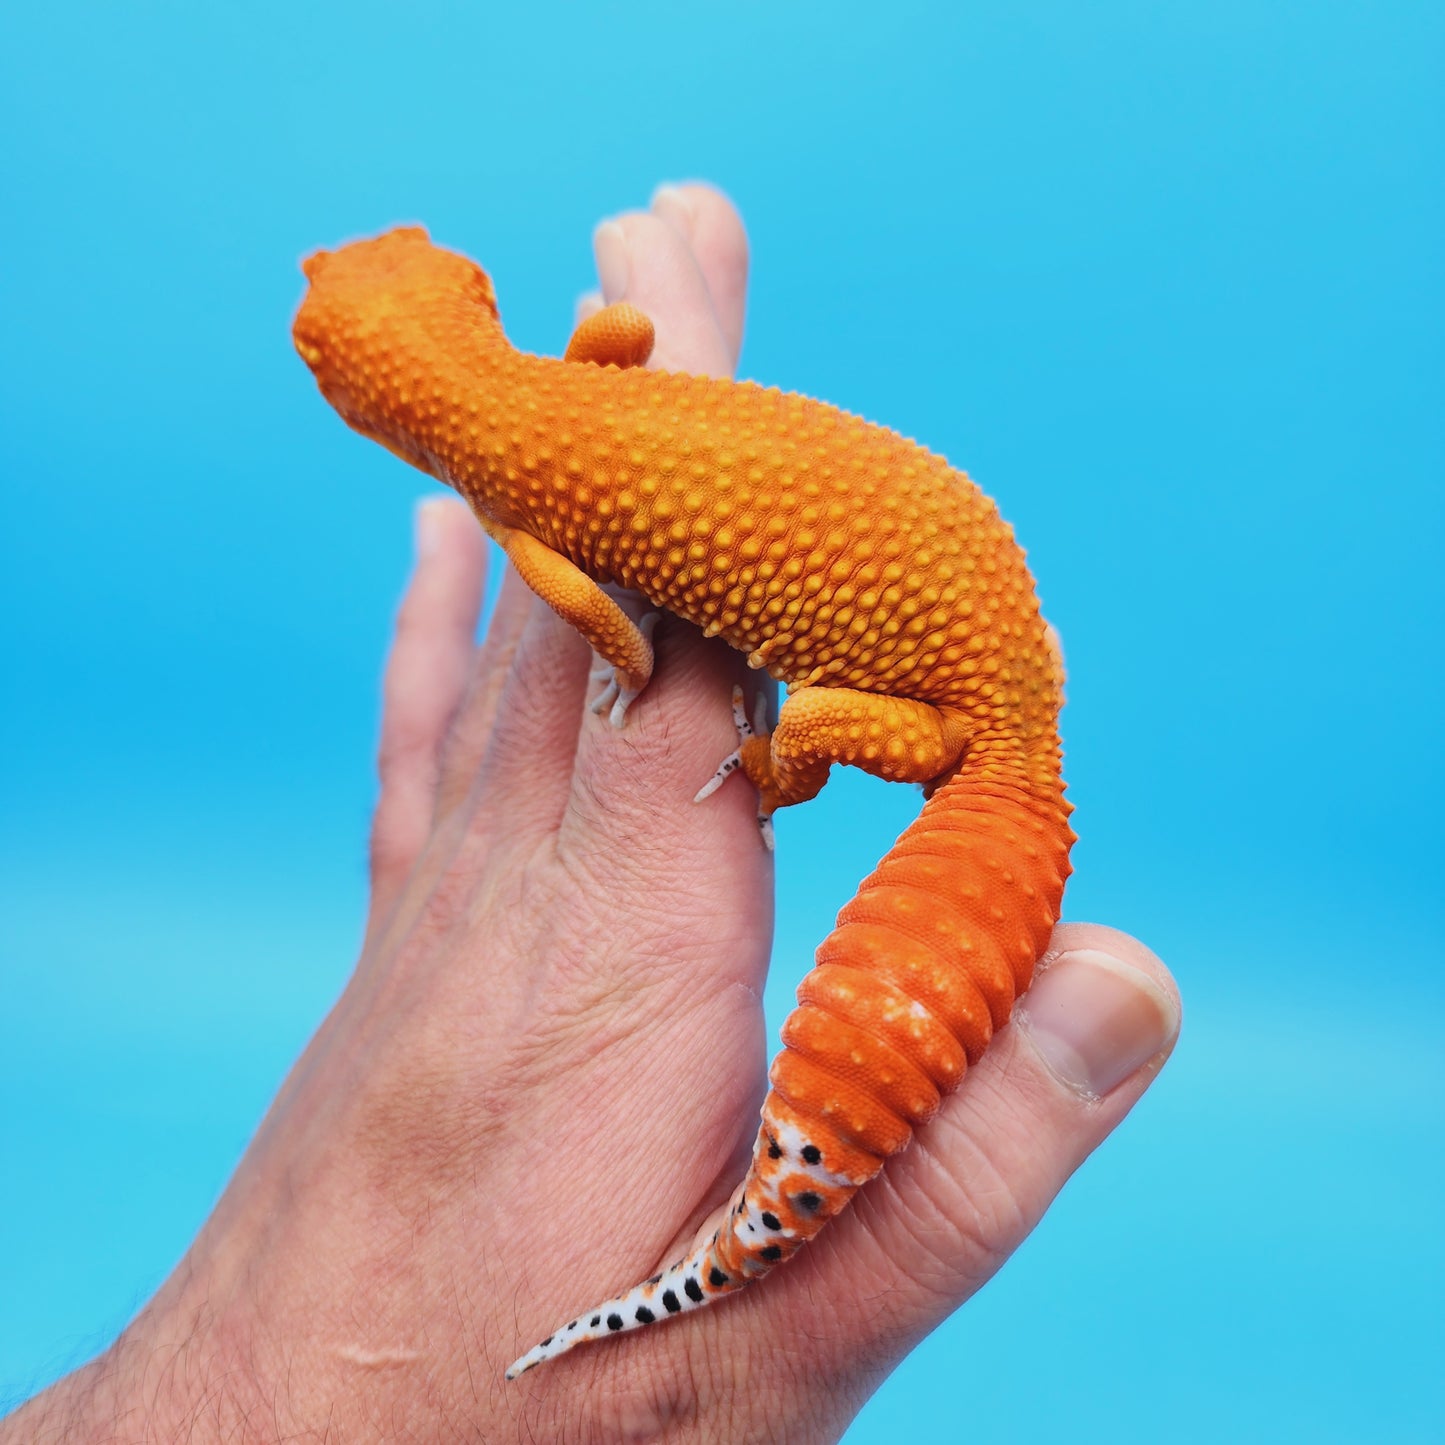 AMAZING Male Mandarin Inferno Tangerine Super Hypo Extreme Carrot Tail Leopard Gecko